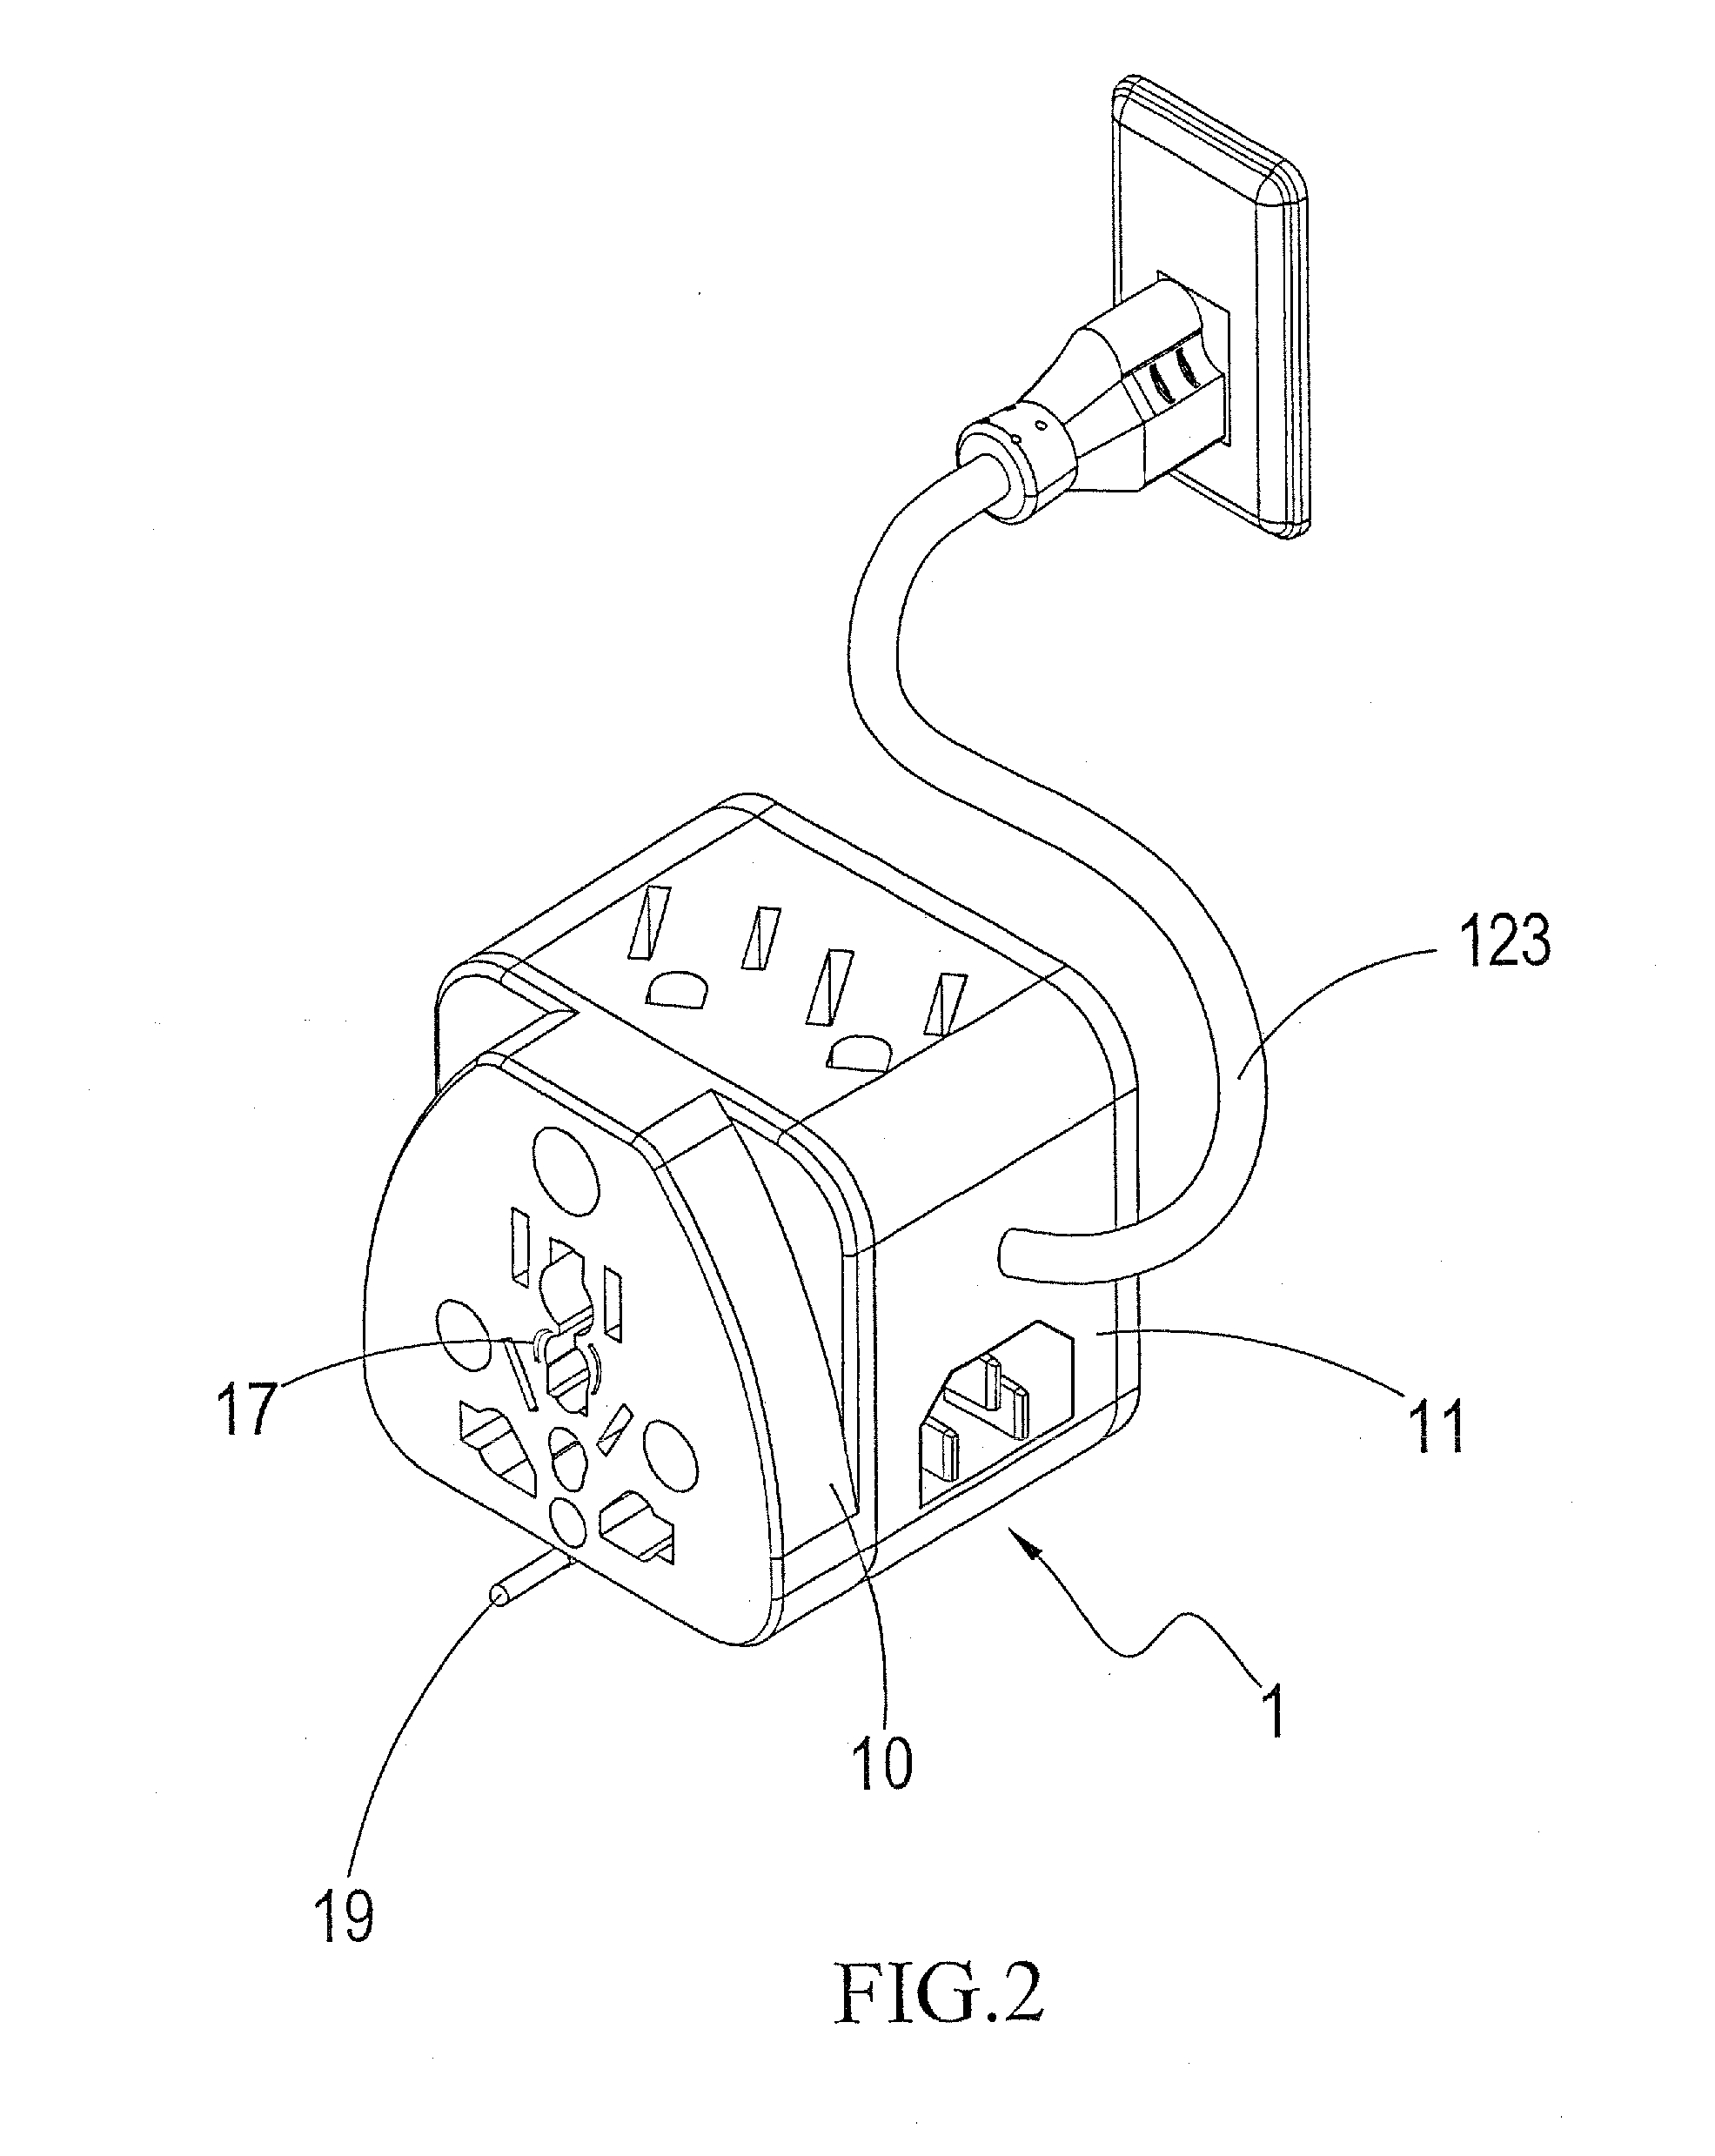 Multi-Standard Socket Adaptor